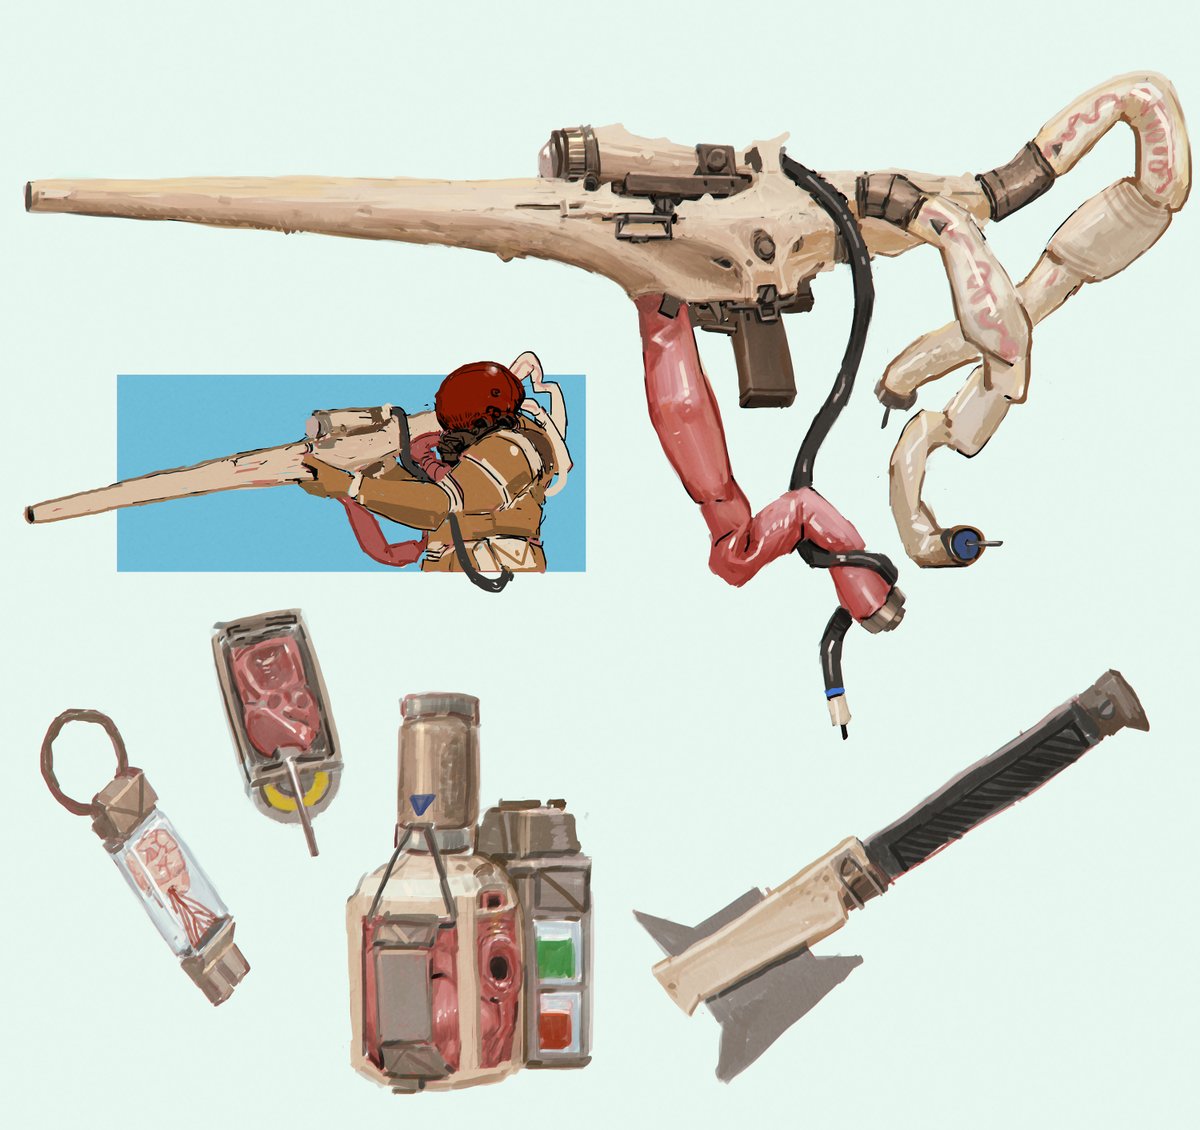 Astronaut's biomimetic survival kit #MaySketchADay 15